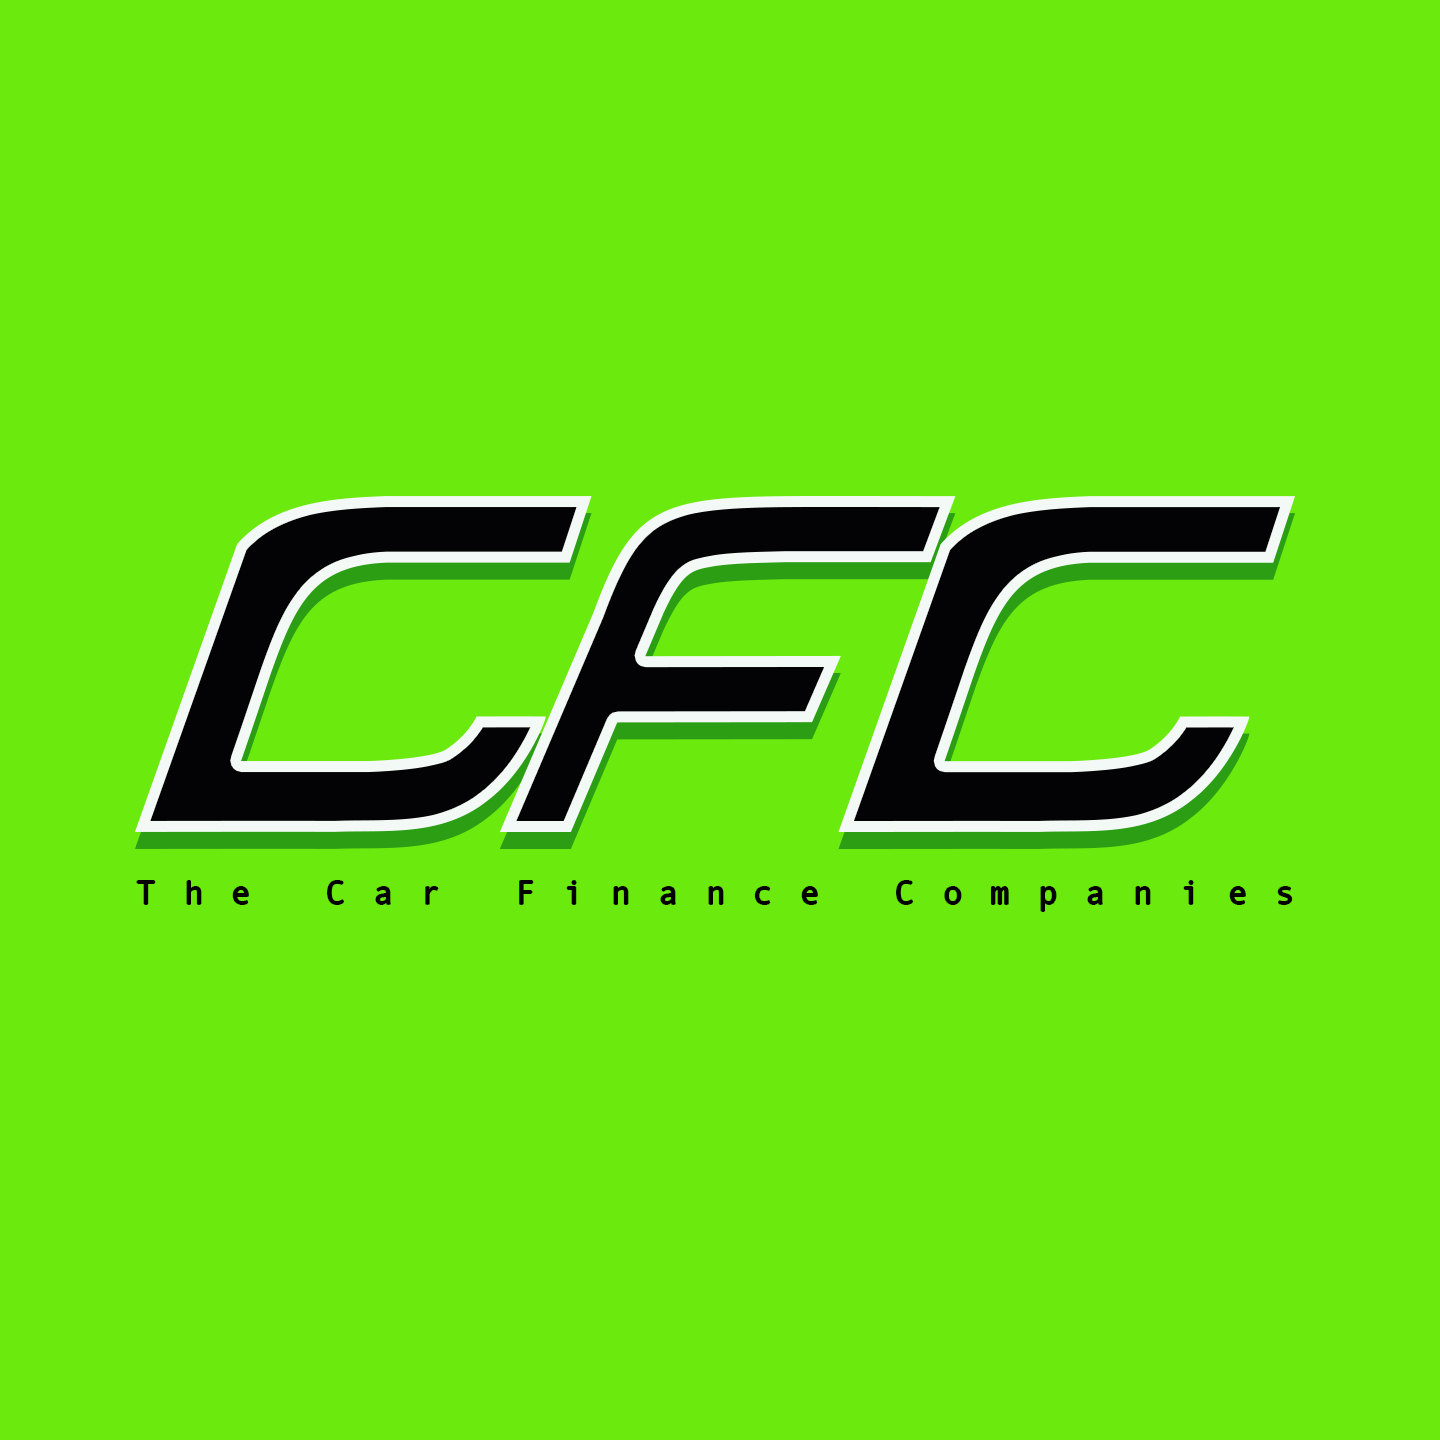 The Car Finance Companies 